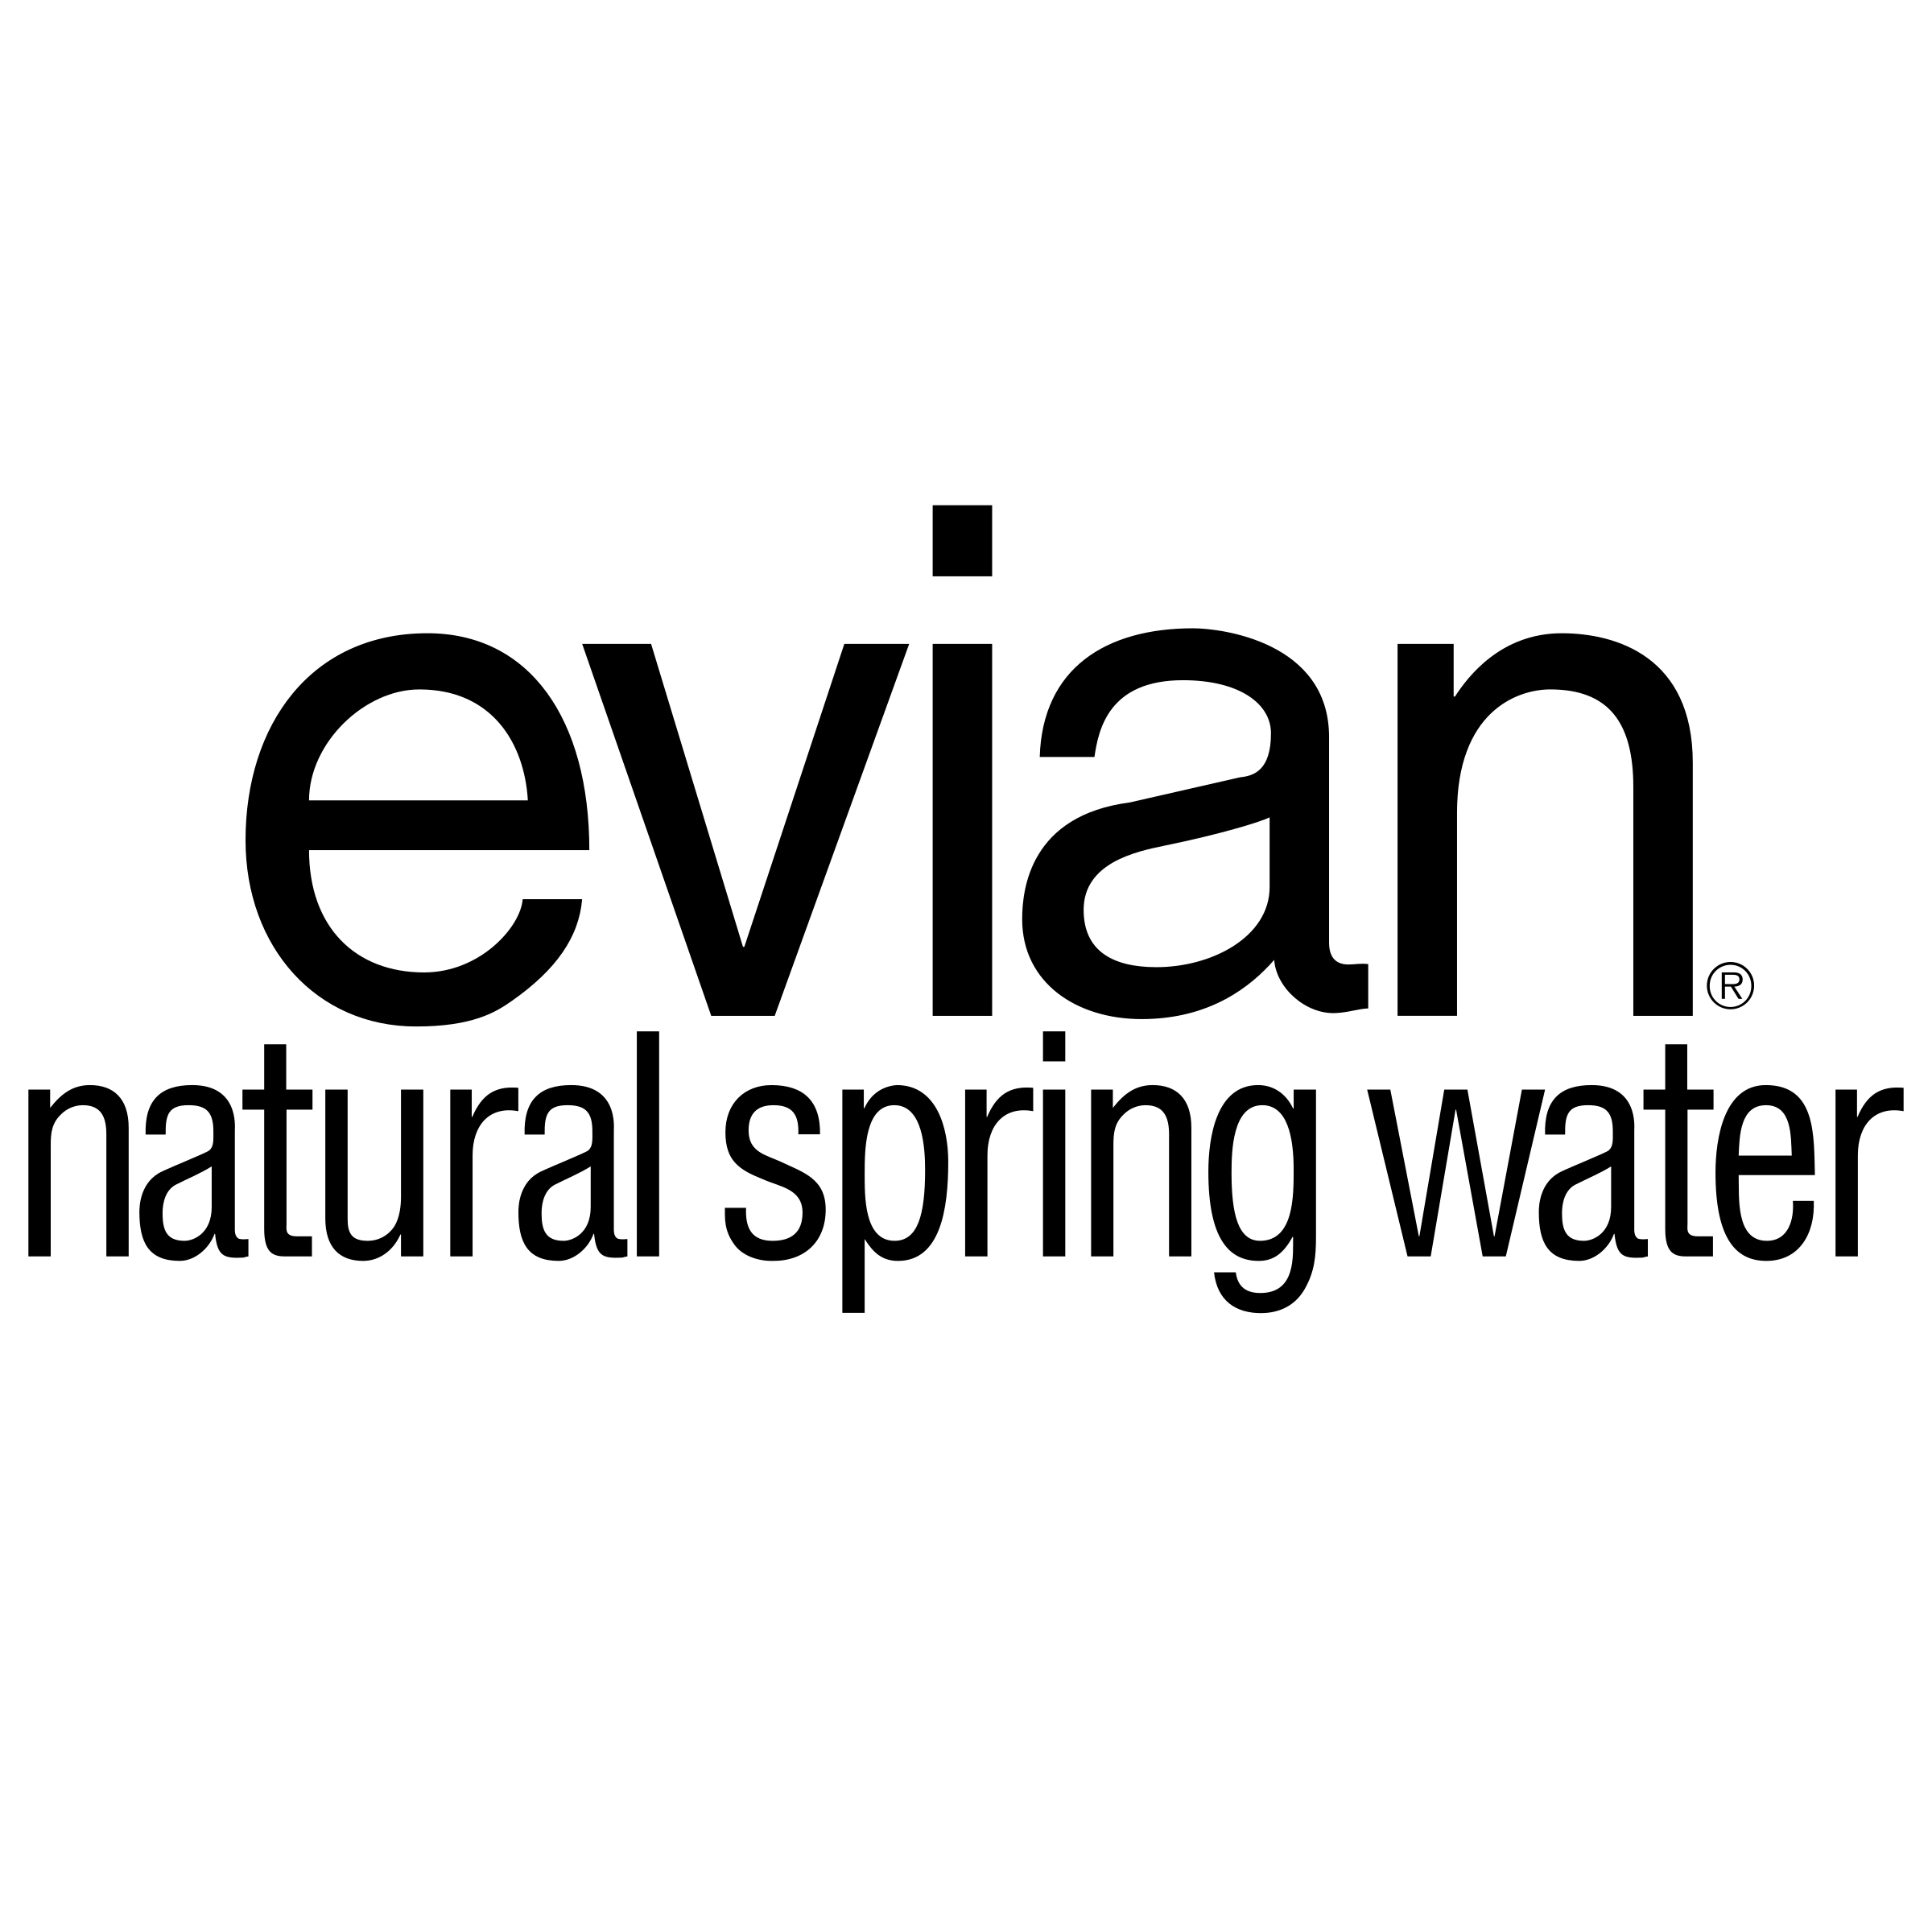 Evian Logo - Evian Logo PNG Transparent & SVG Vector - Freebie Supply